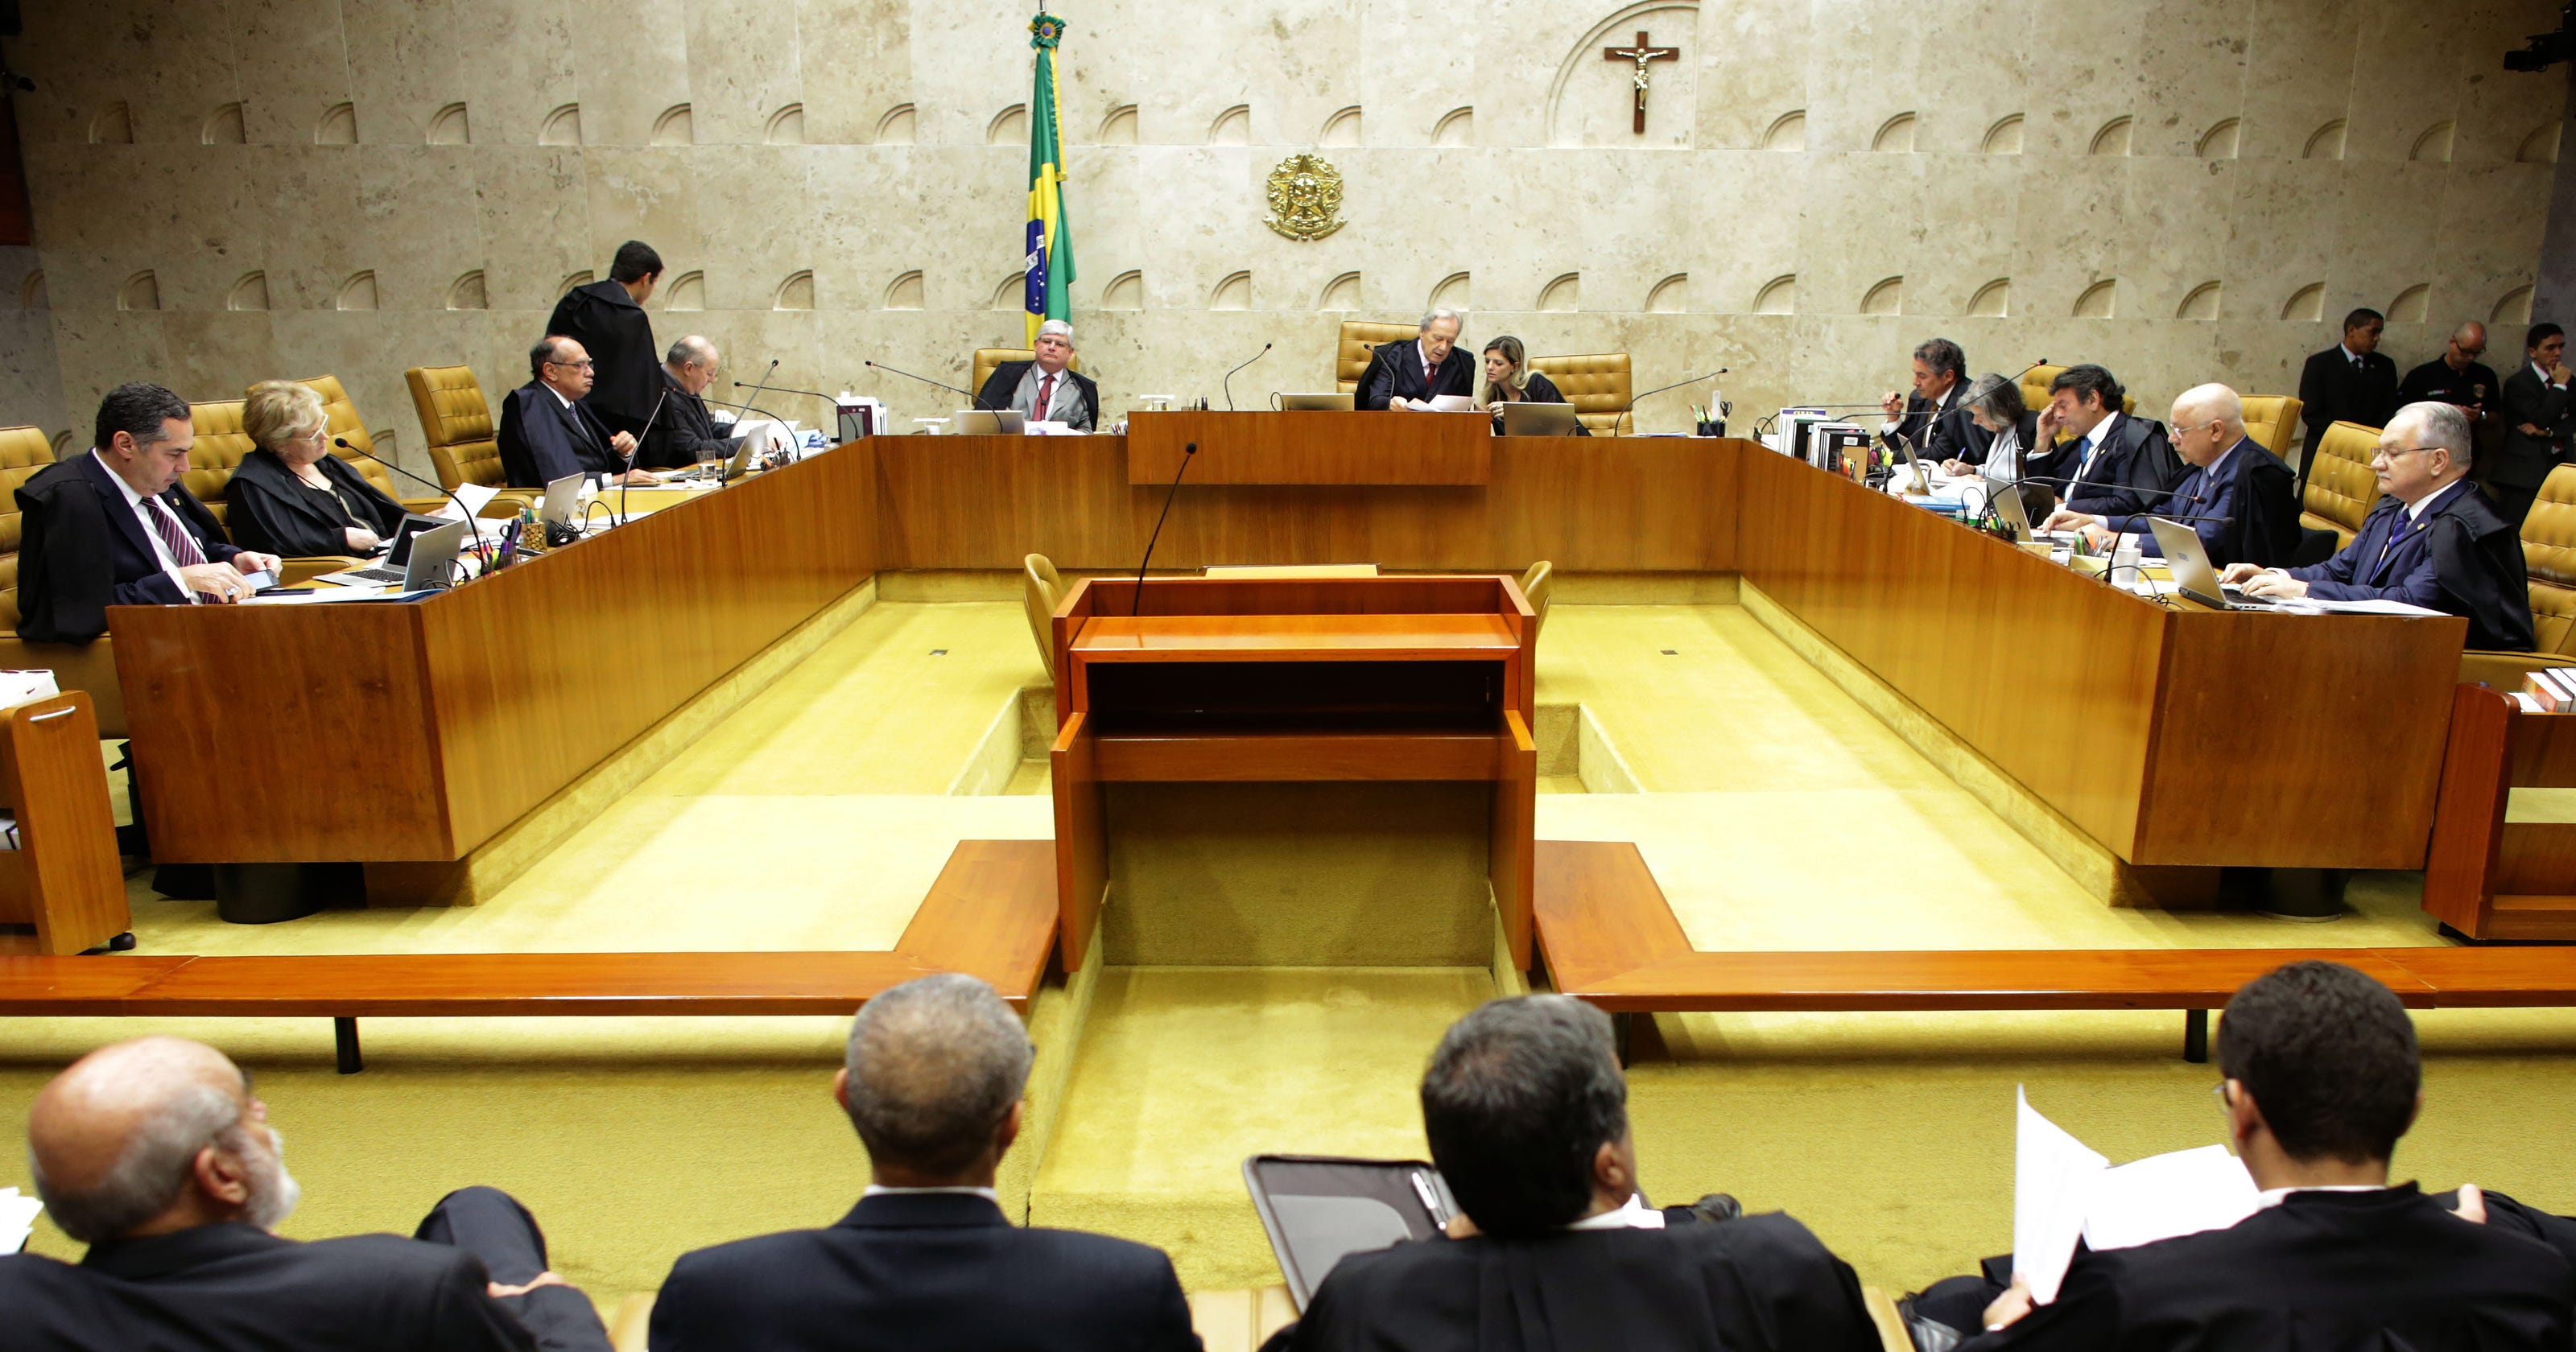 Brazil awaits impeachment proceedings of president